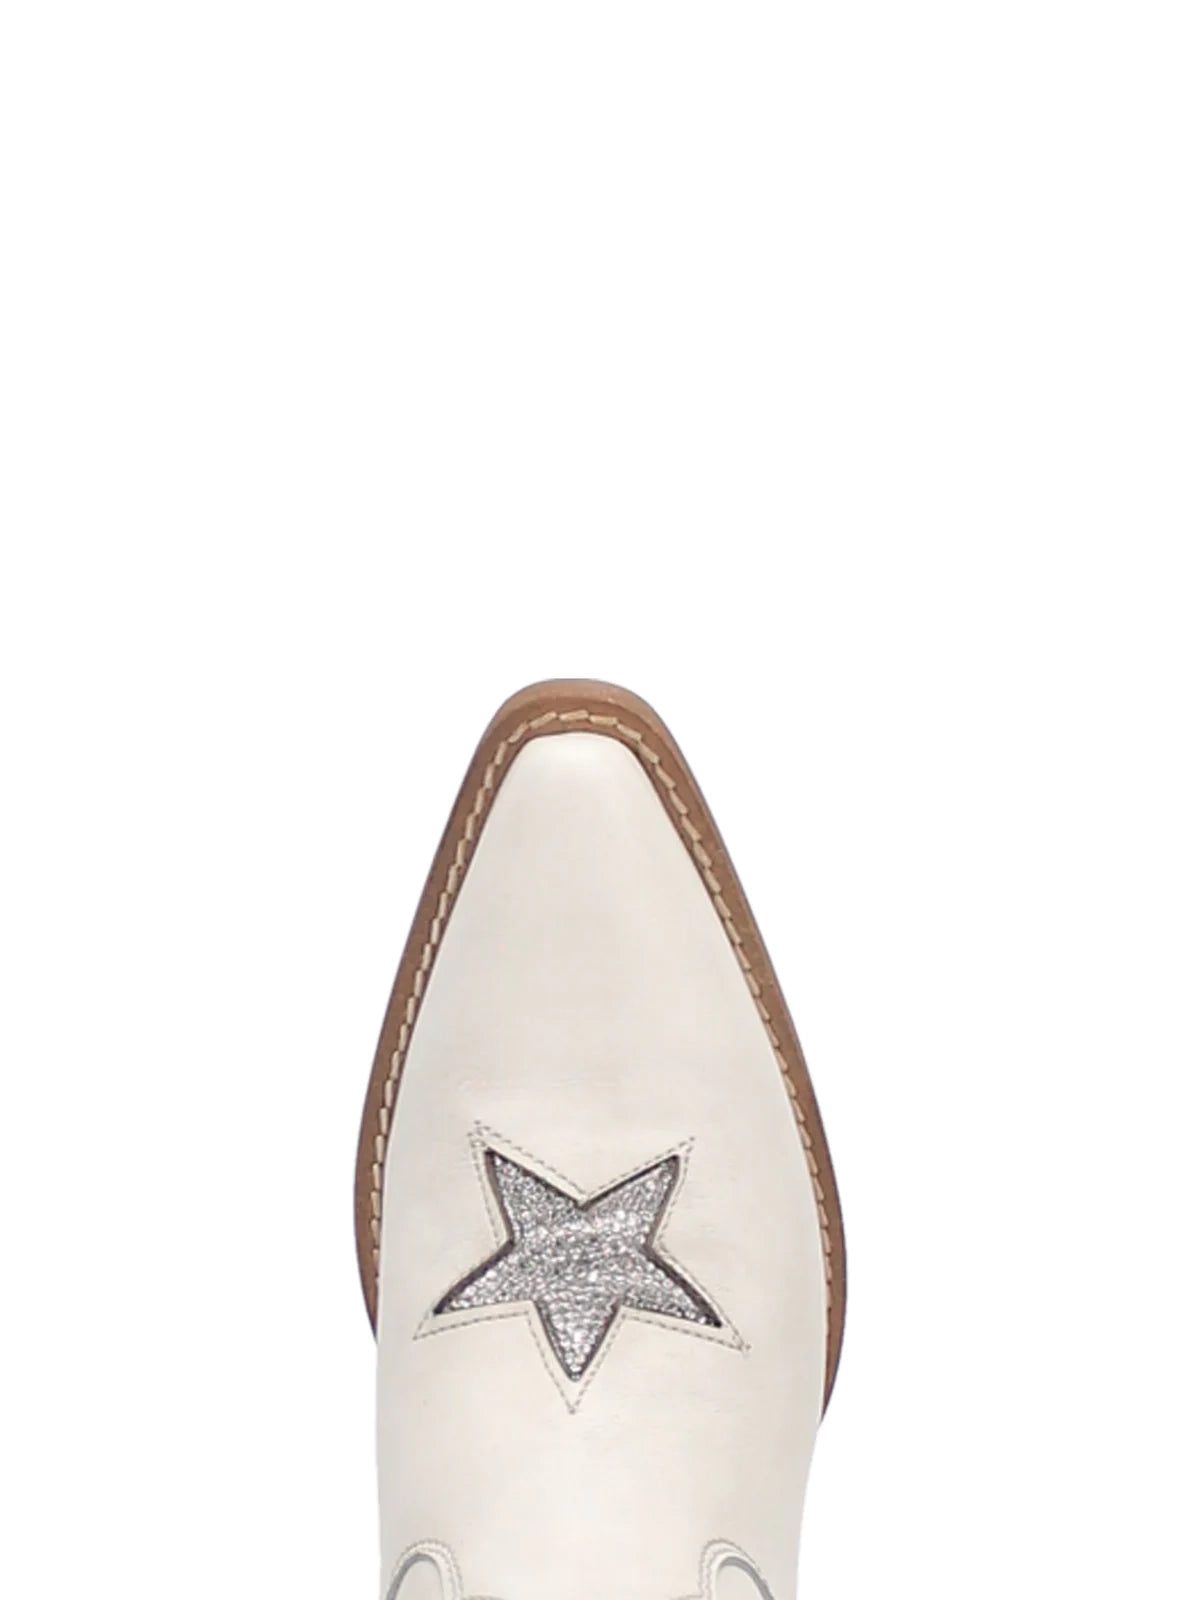 dingo 1969 star struck leather bootie in white